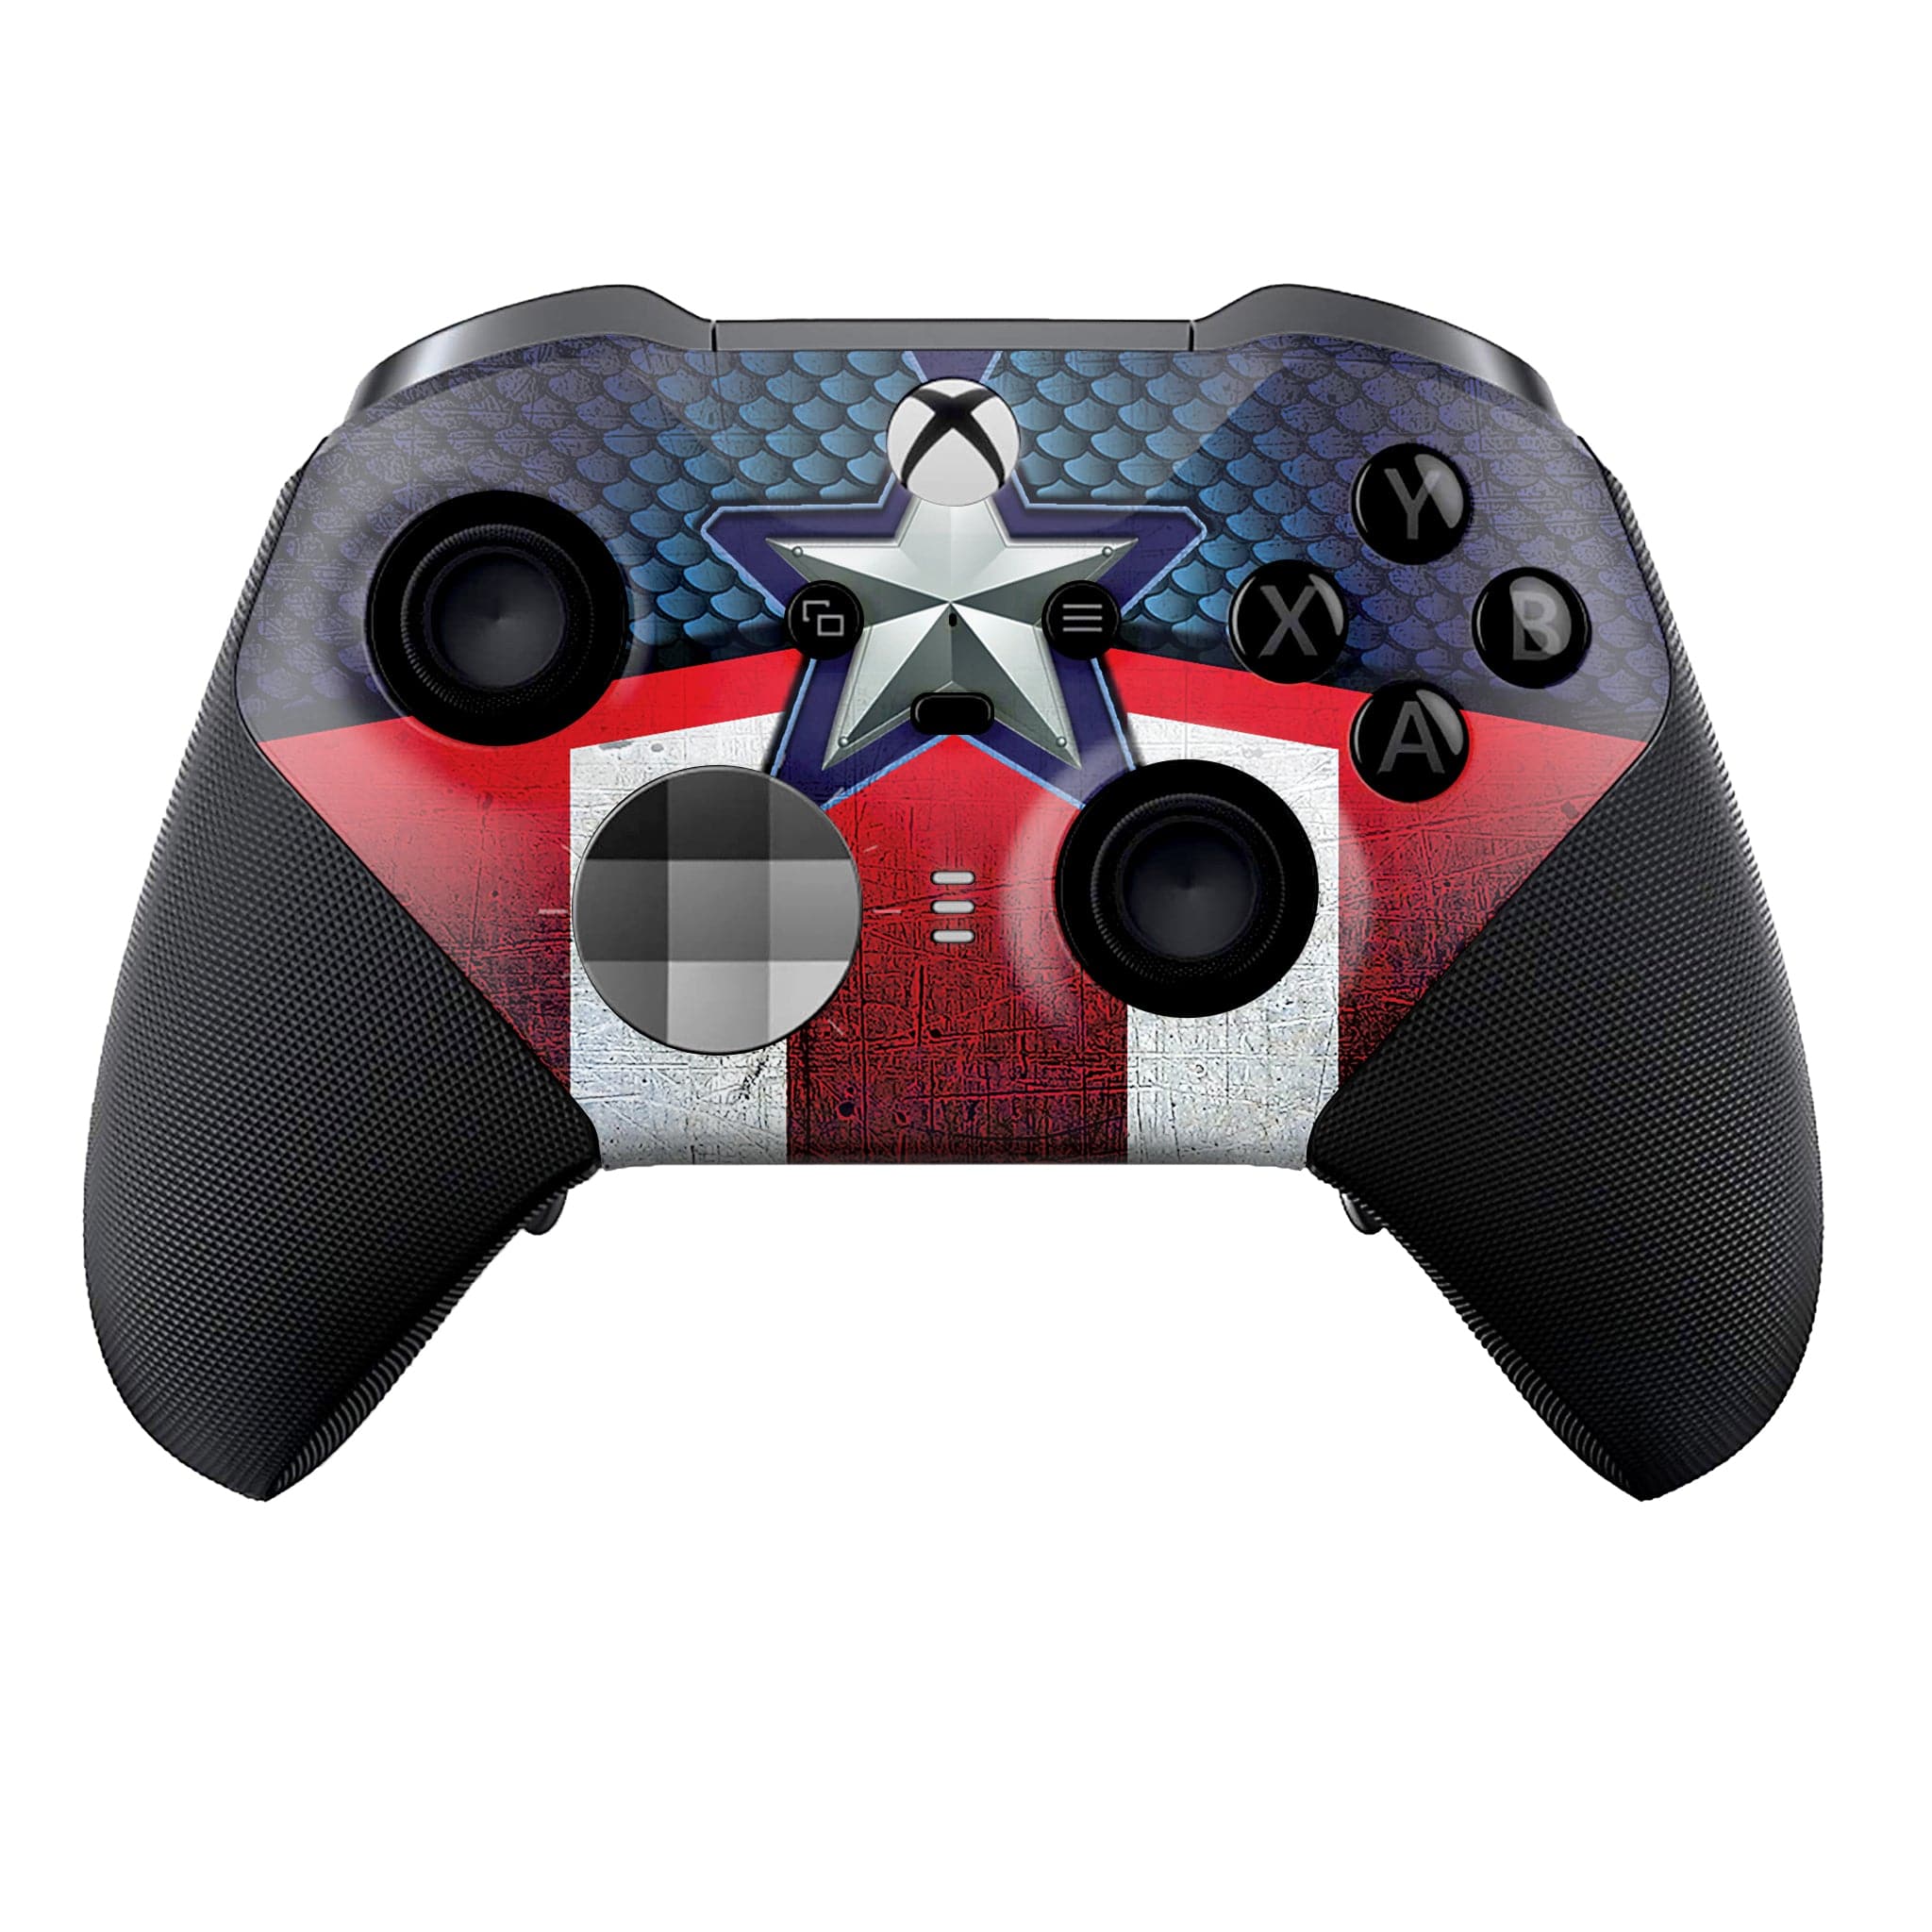 Captain America Xbox Elite Series 2 Controller - Dream Controller